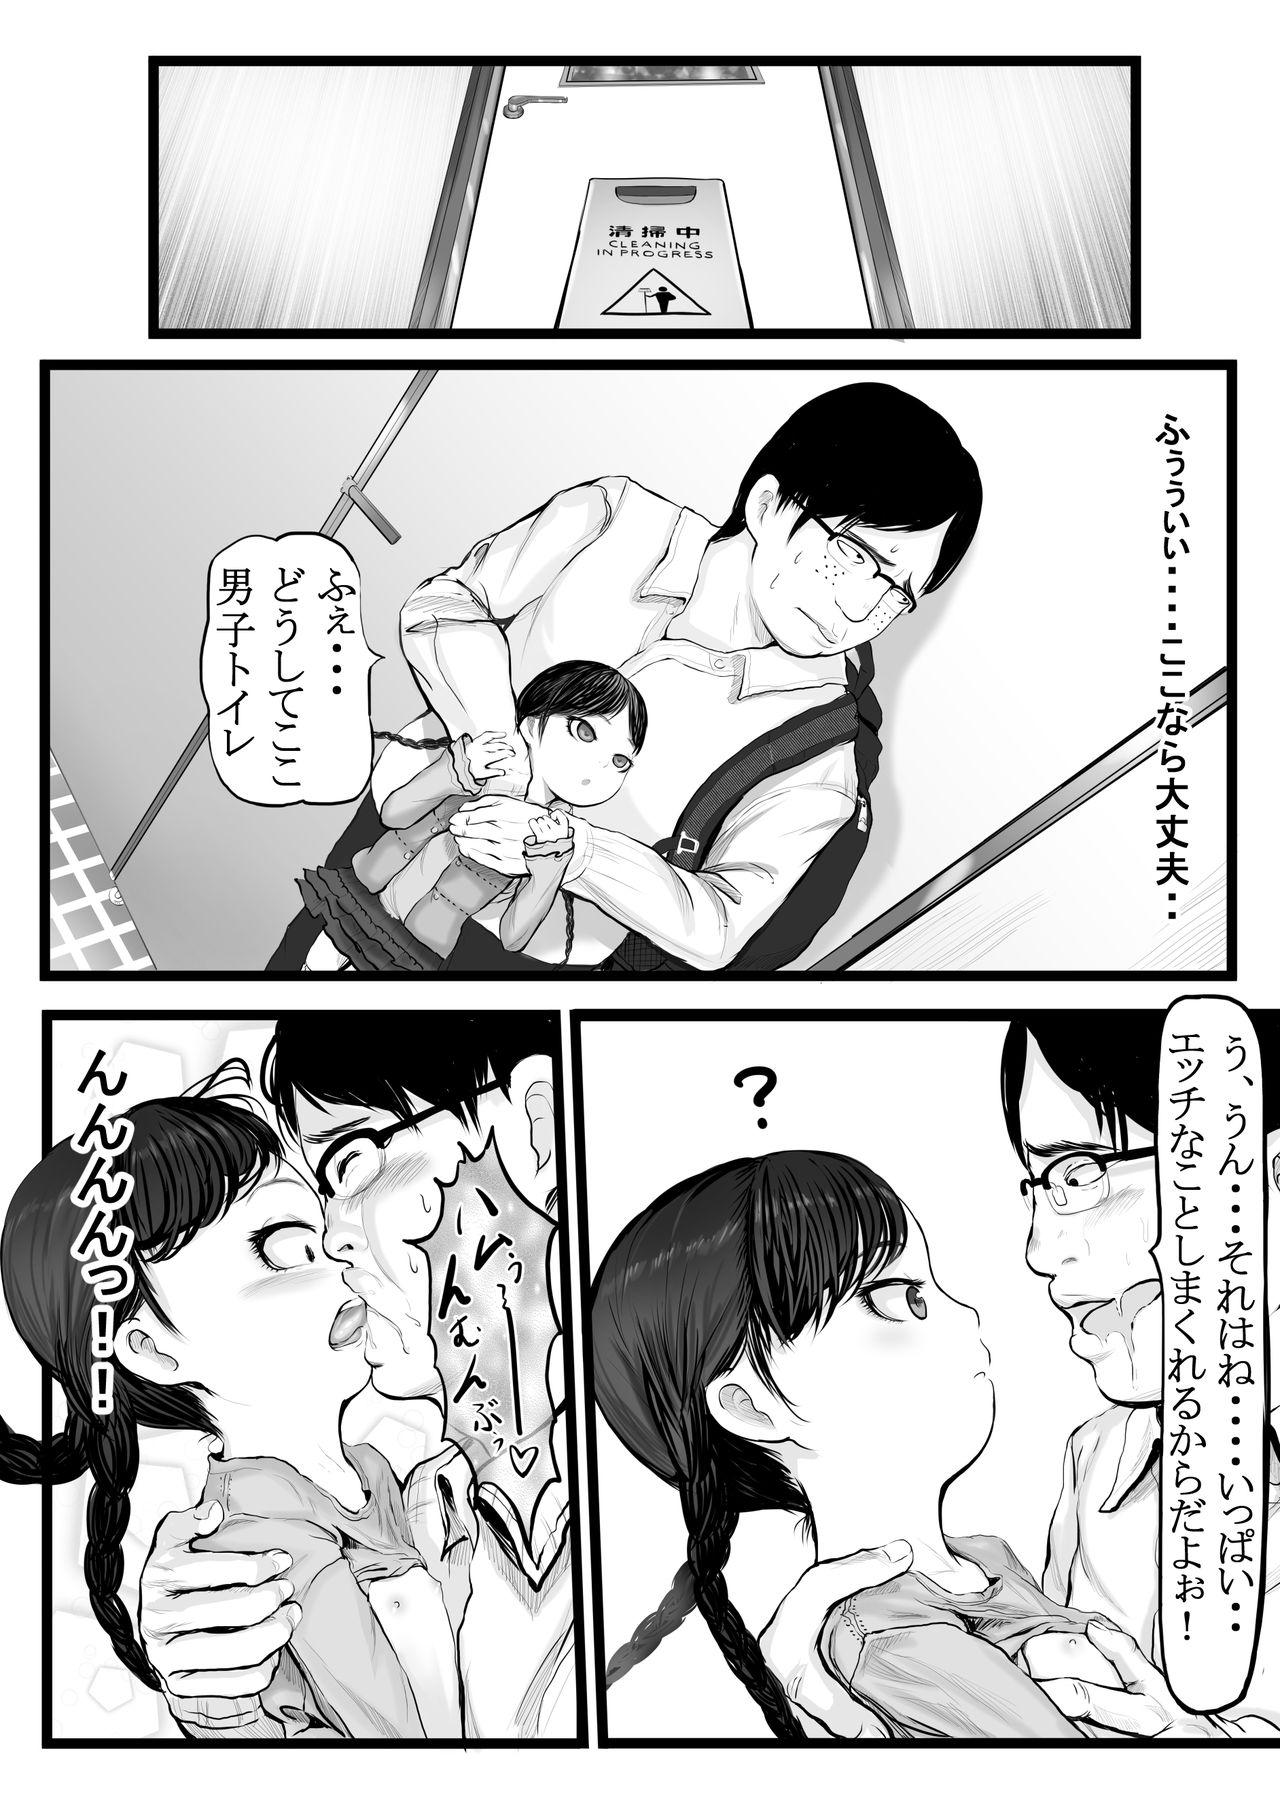 Chaturbate Shoujo Toshokan + Omake Illust - Original Kissing - Page 11